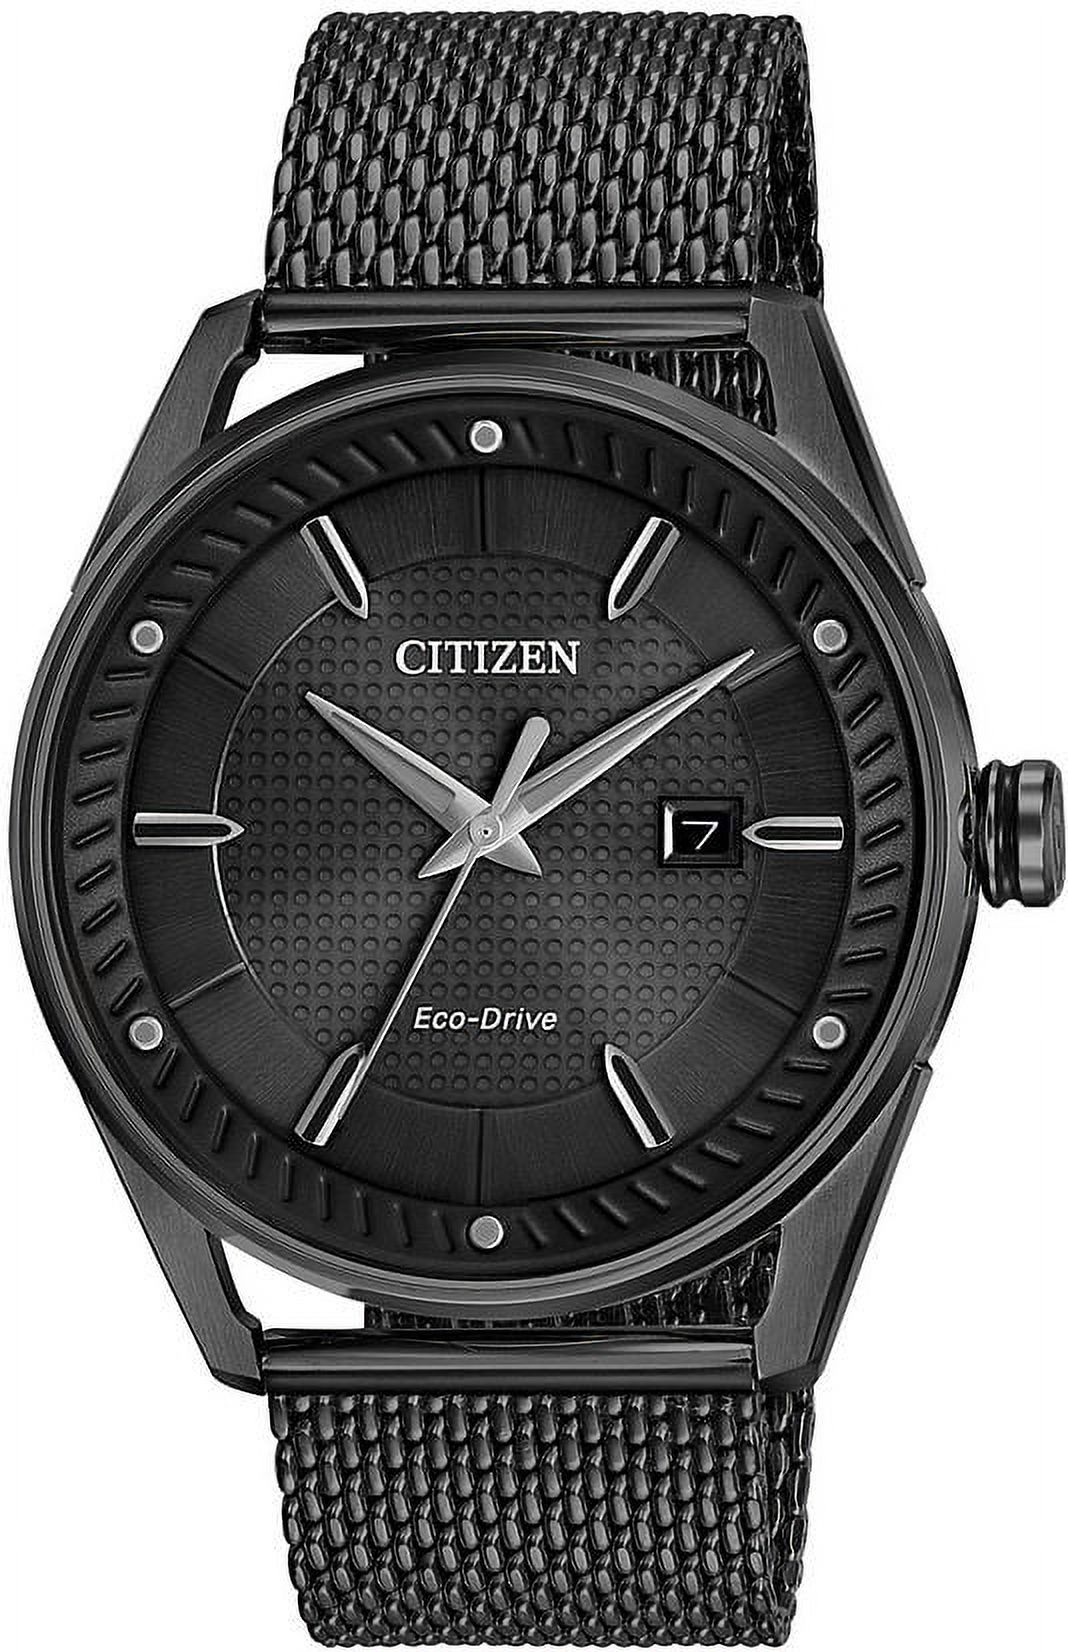 Citizen Men's Drive Weekender Sport Casual Black Stainless Steel Watch BM6988-57E - image 1 of 4